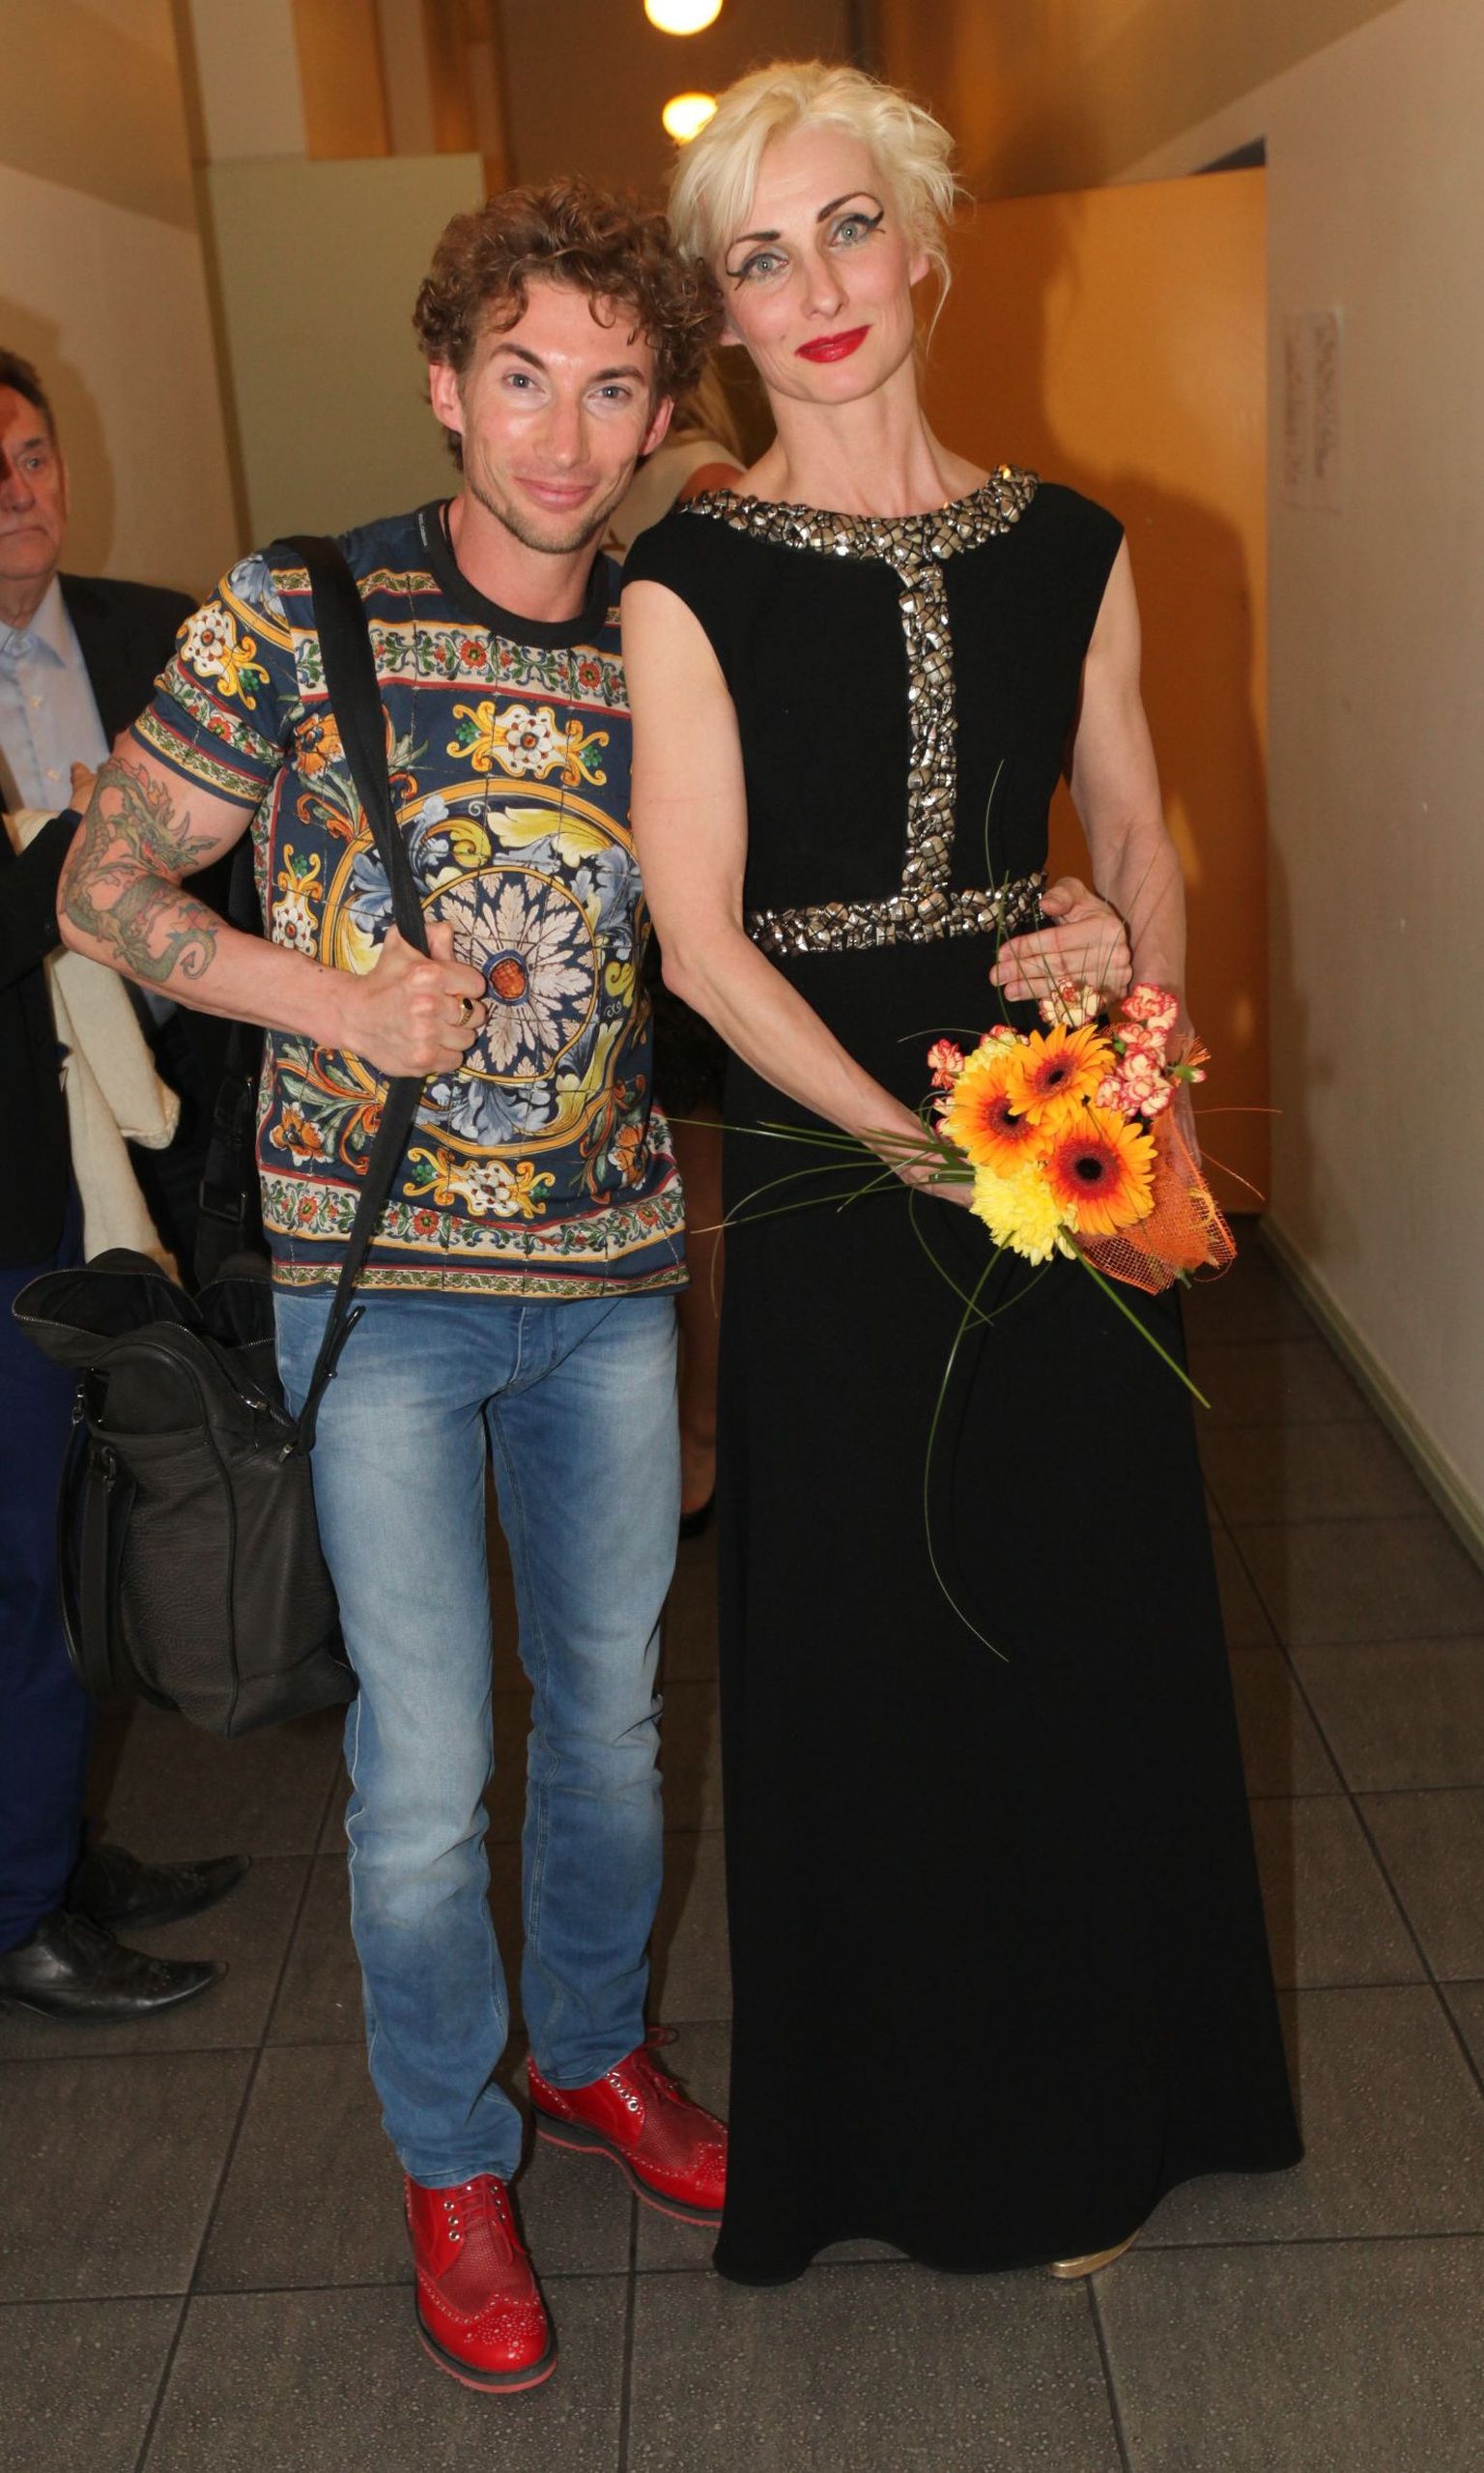 Missis Estonia 2015/SIXTINA 30.05.2015 Salme Kultuurikeskus.
Marko Tasane koos oma sõbranna Missis Estonia 98 Anu Abozenko`ga